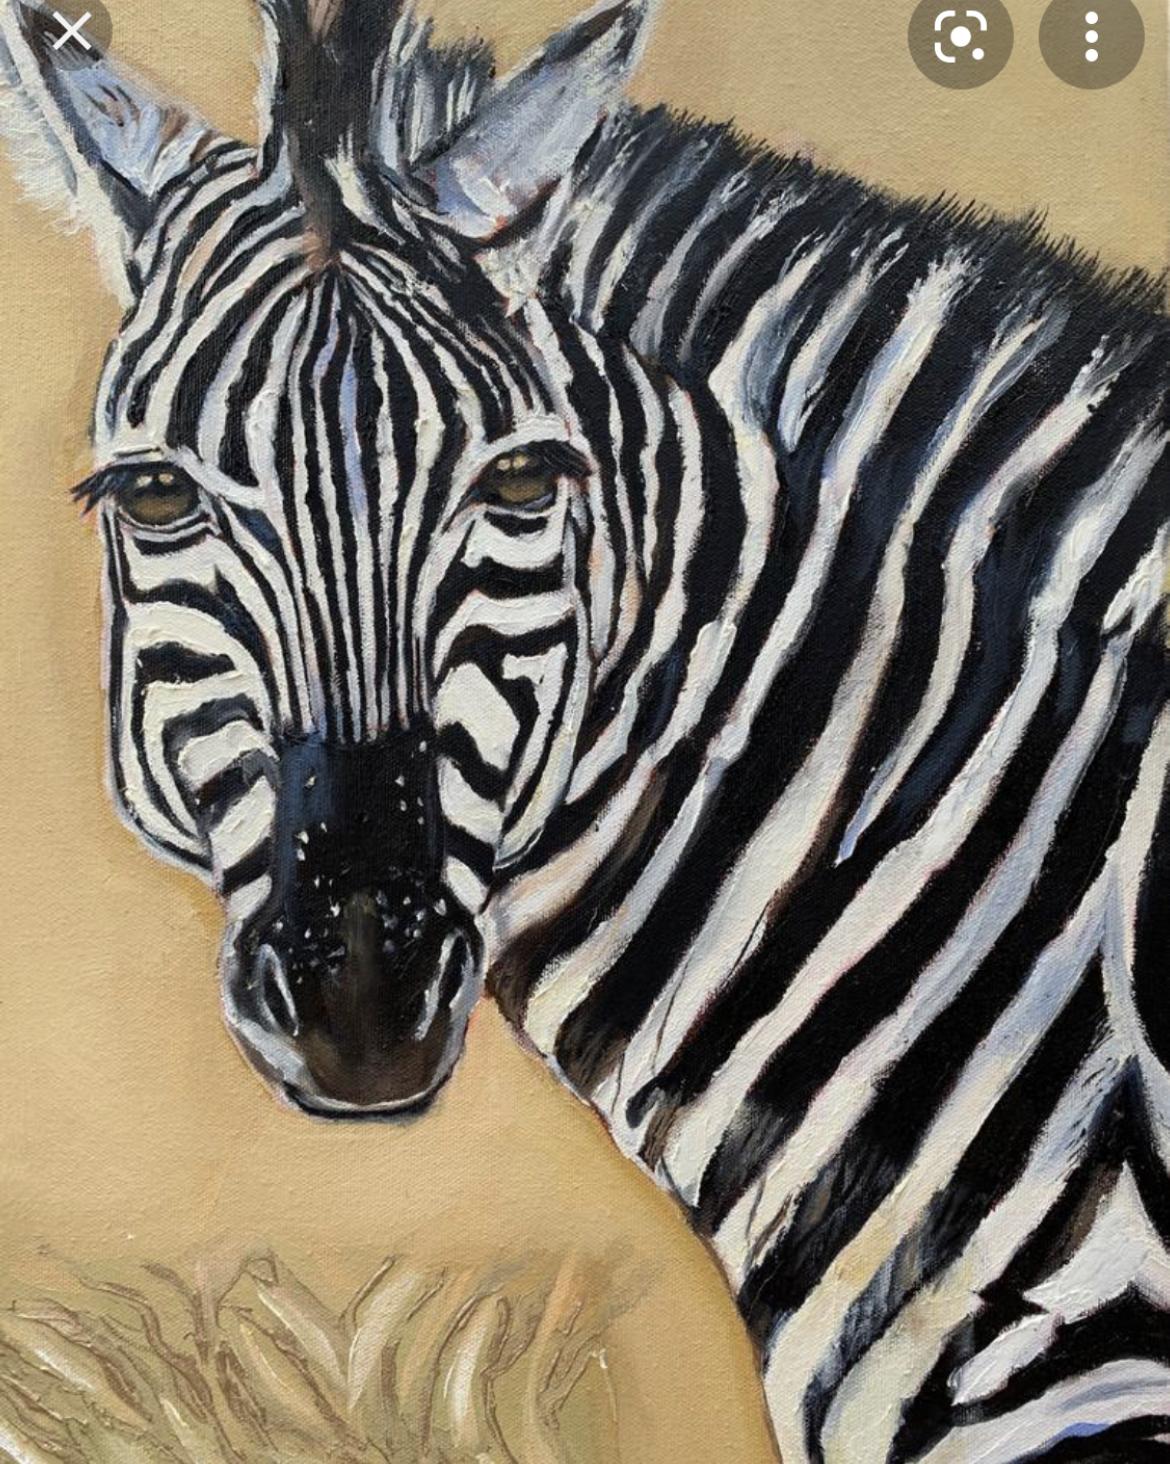 Zebra drawing